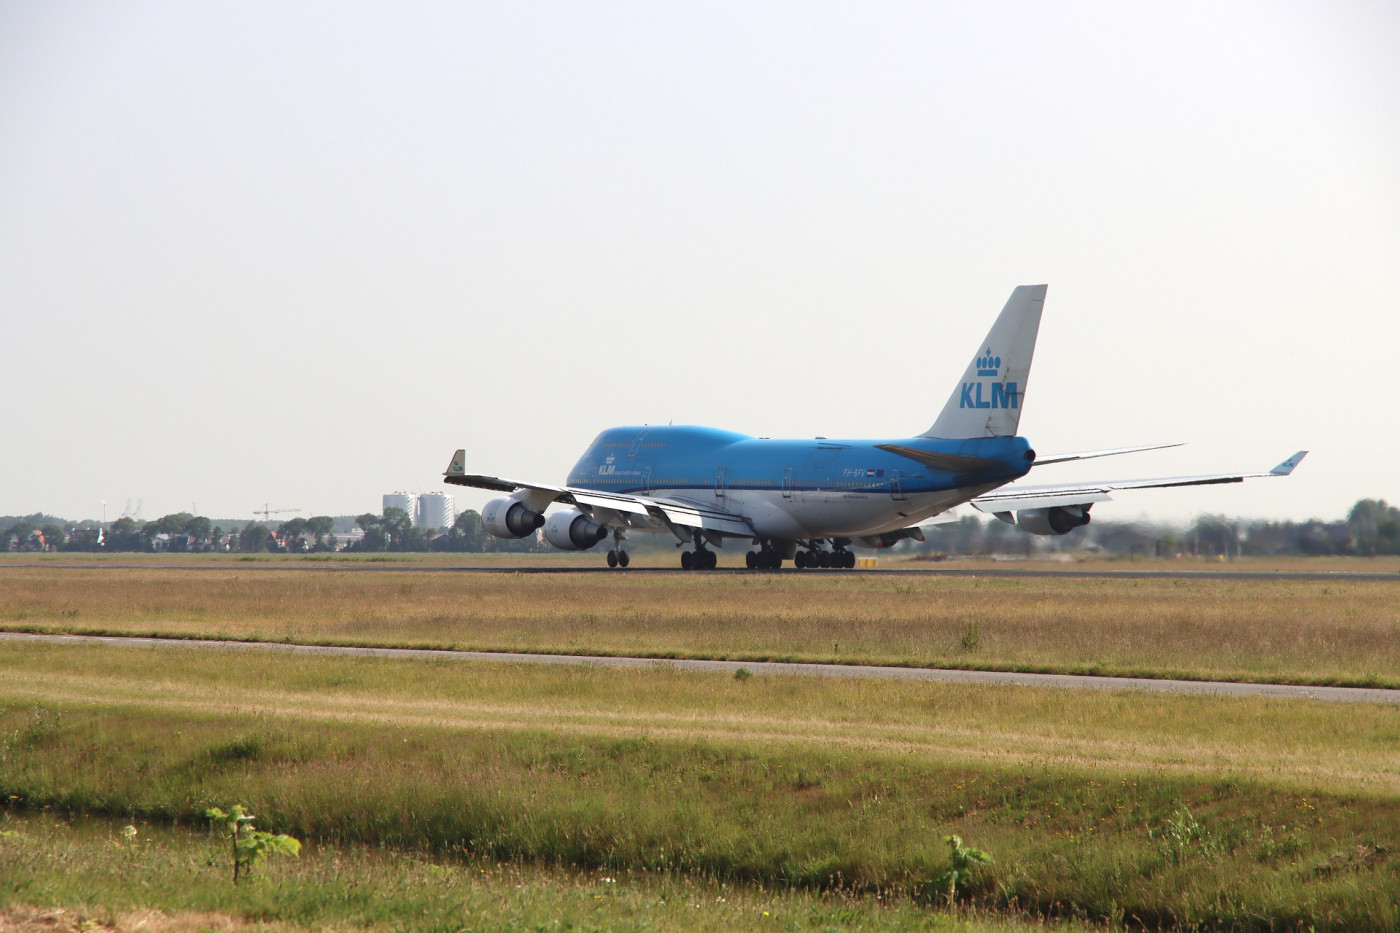 Avião pousa no aeroporto Schiphol de Amsterdã